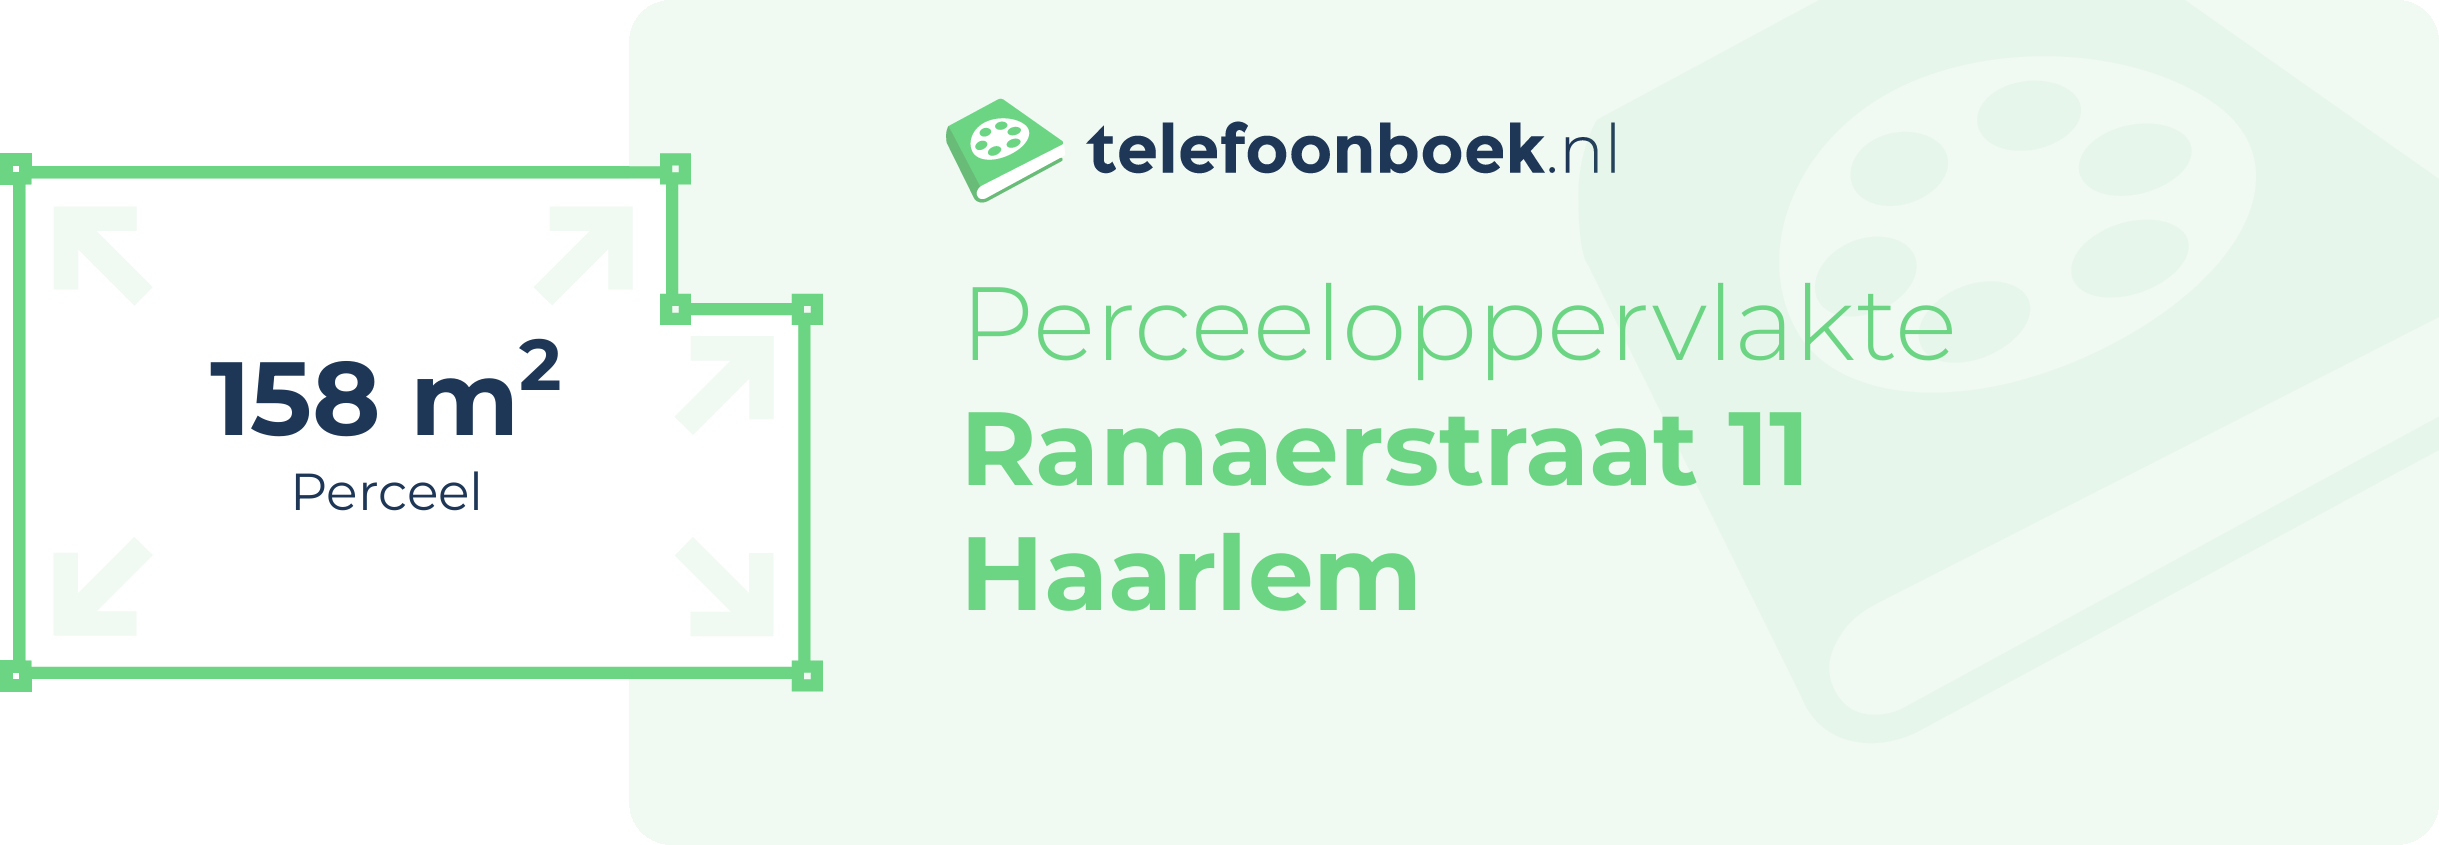 Perceeloppervlakte Ramaerstraat 11 Haarlem